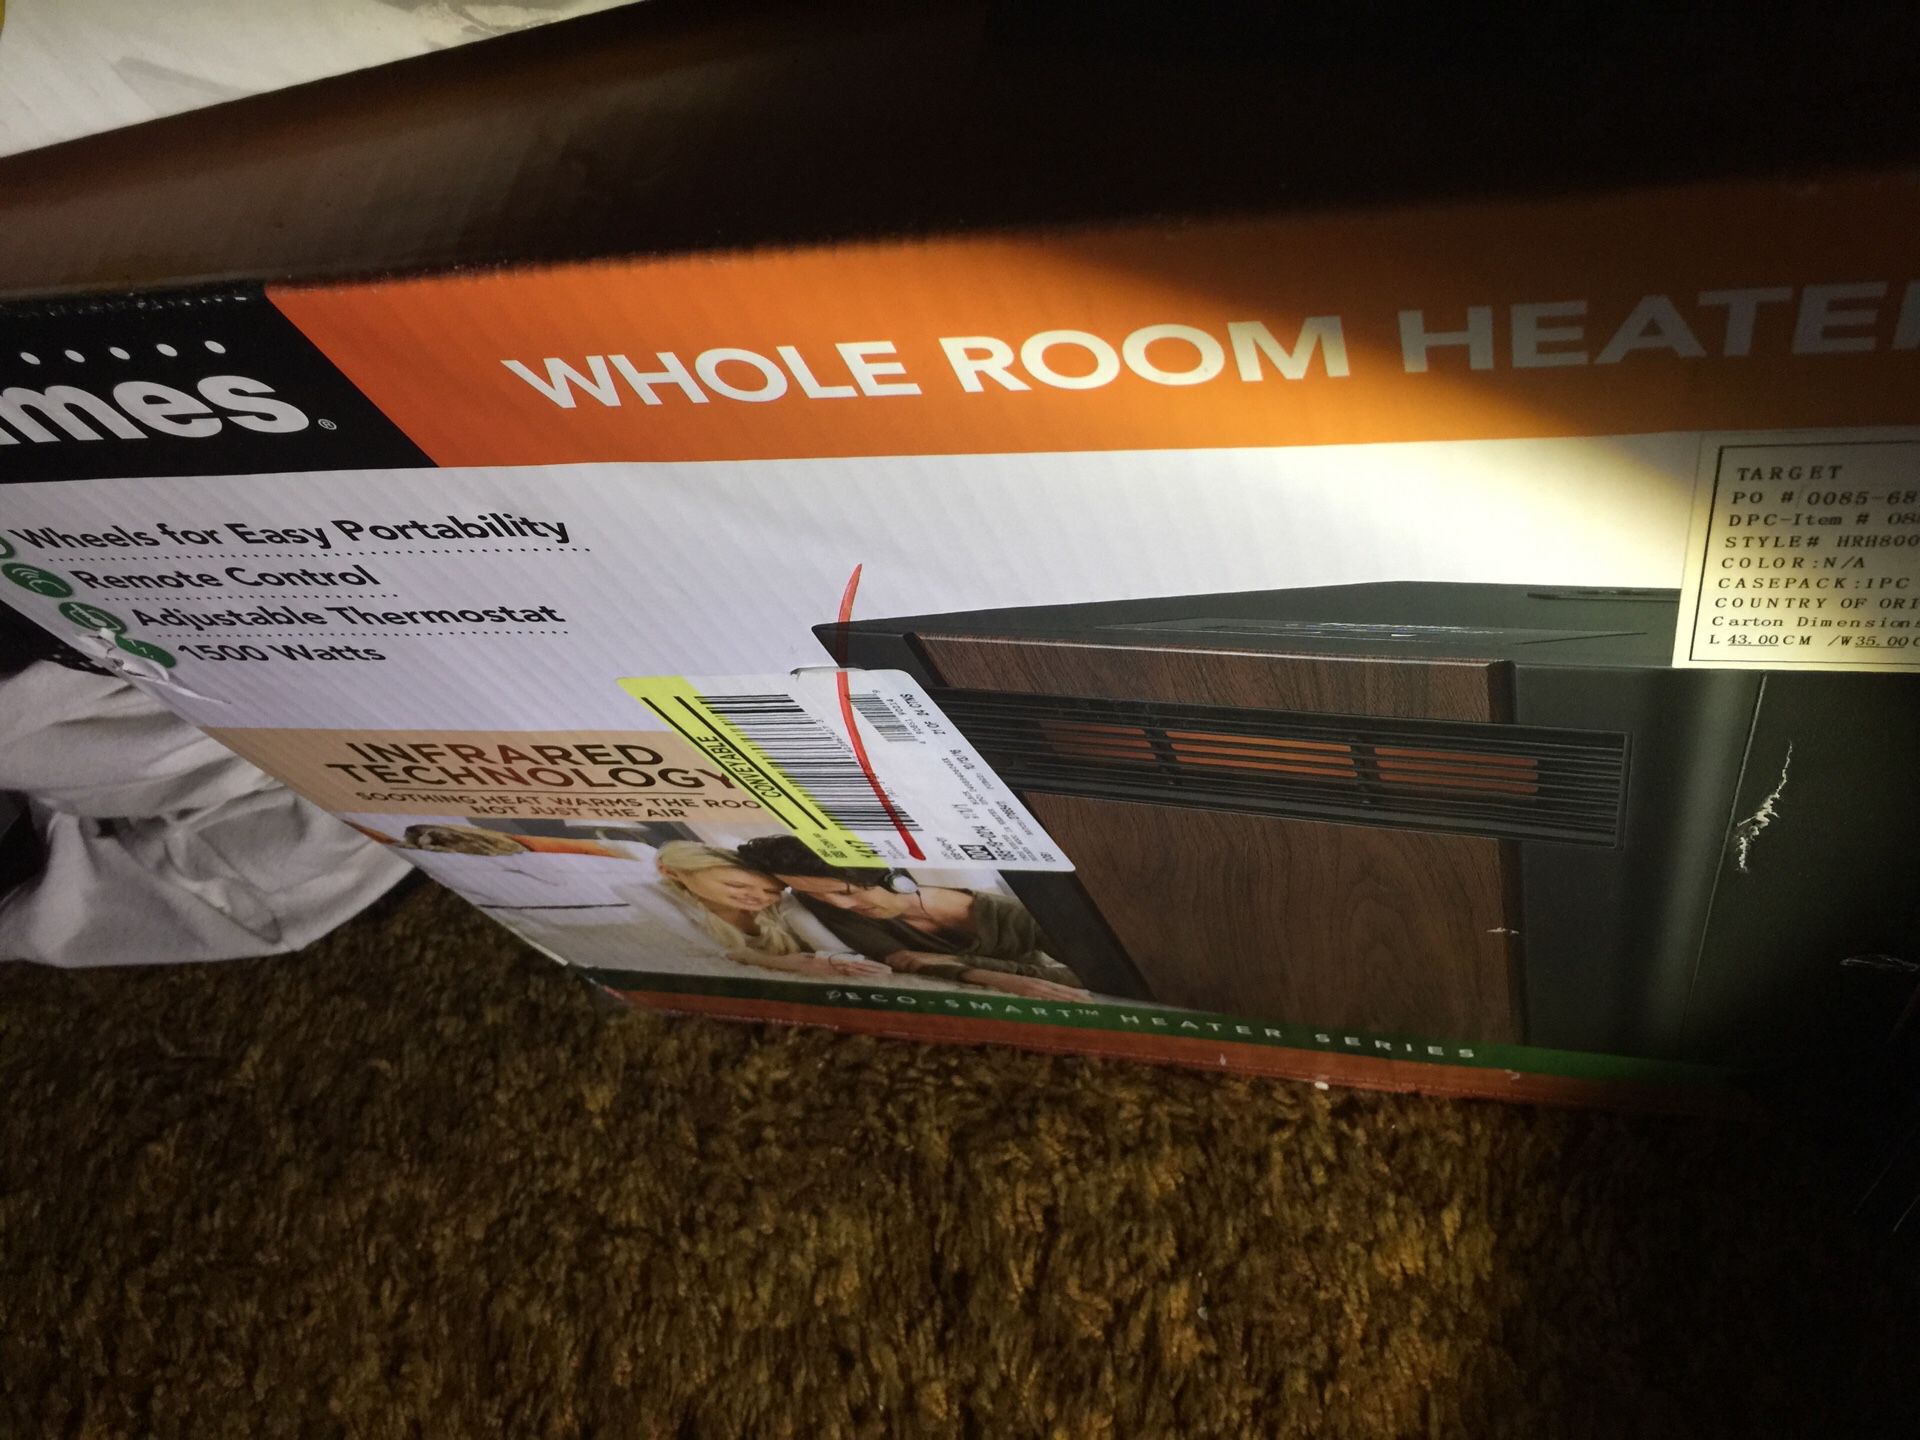 Holmes whole room heater